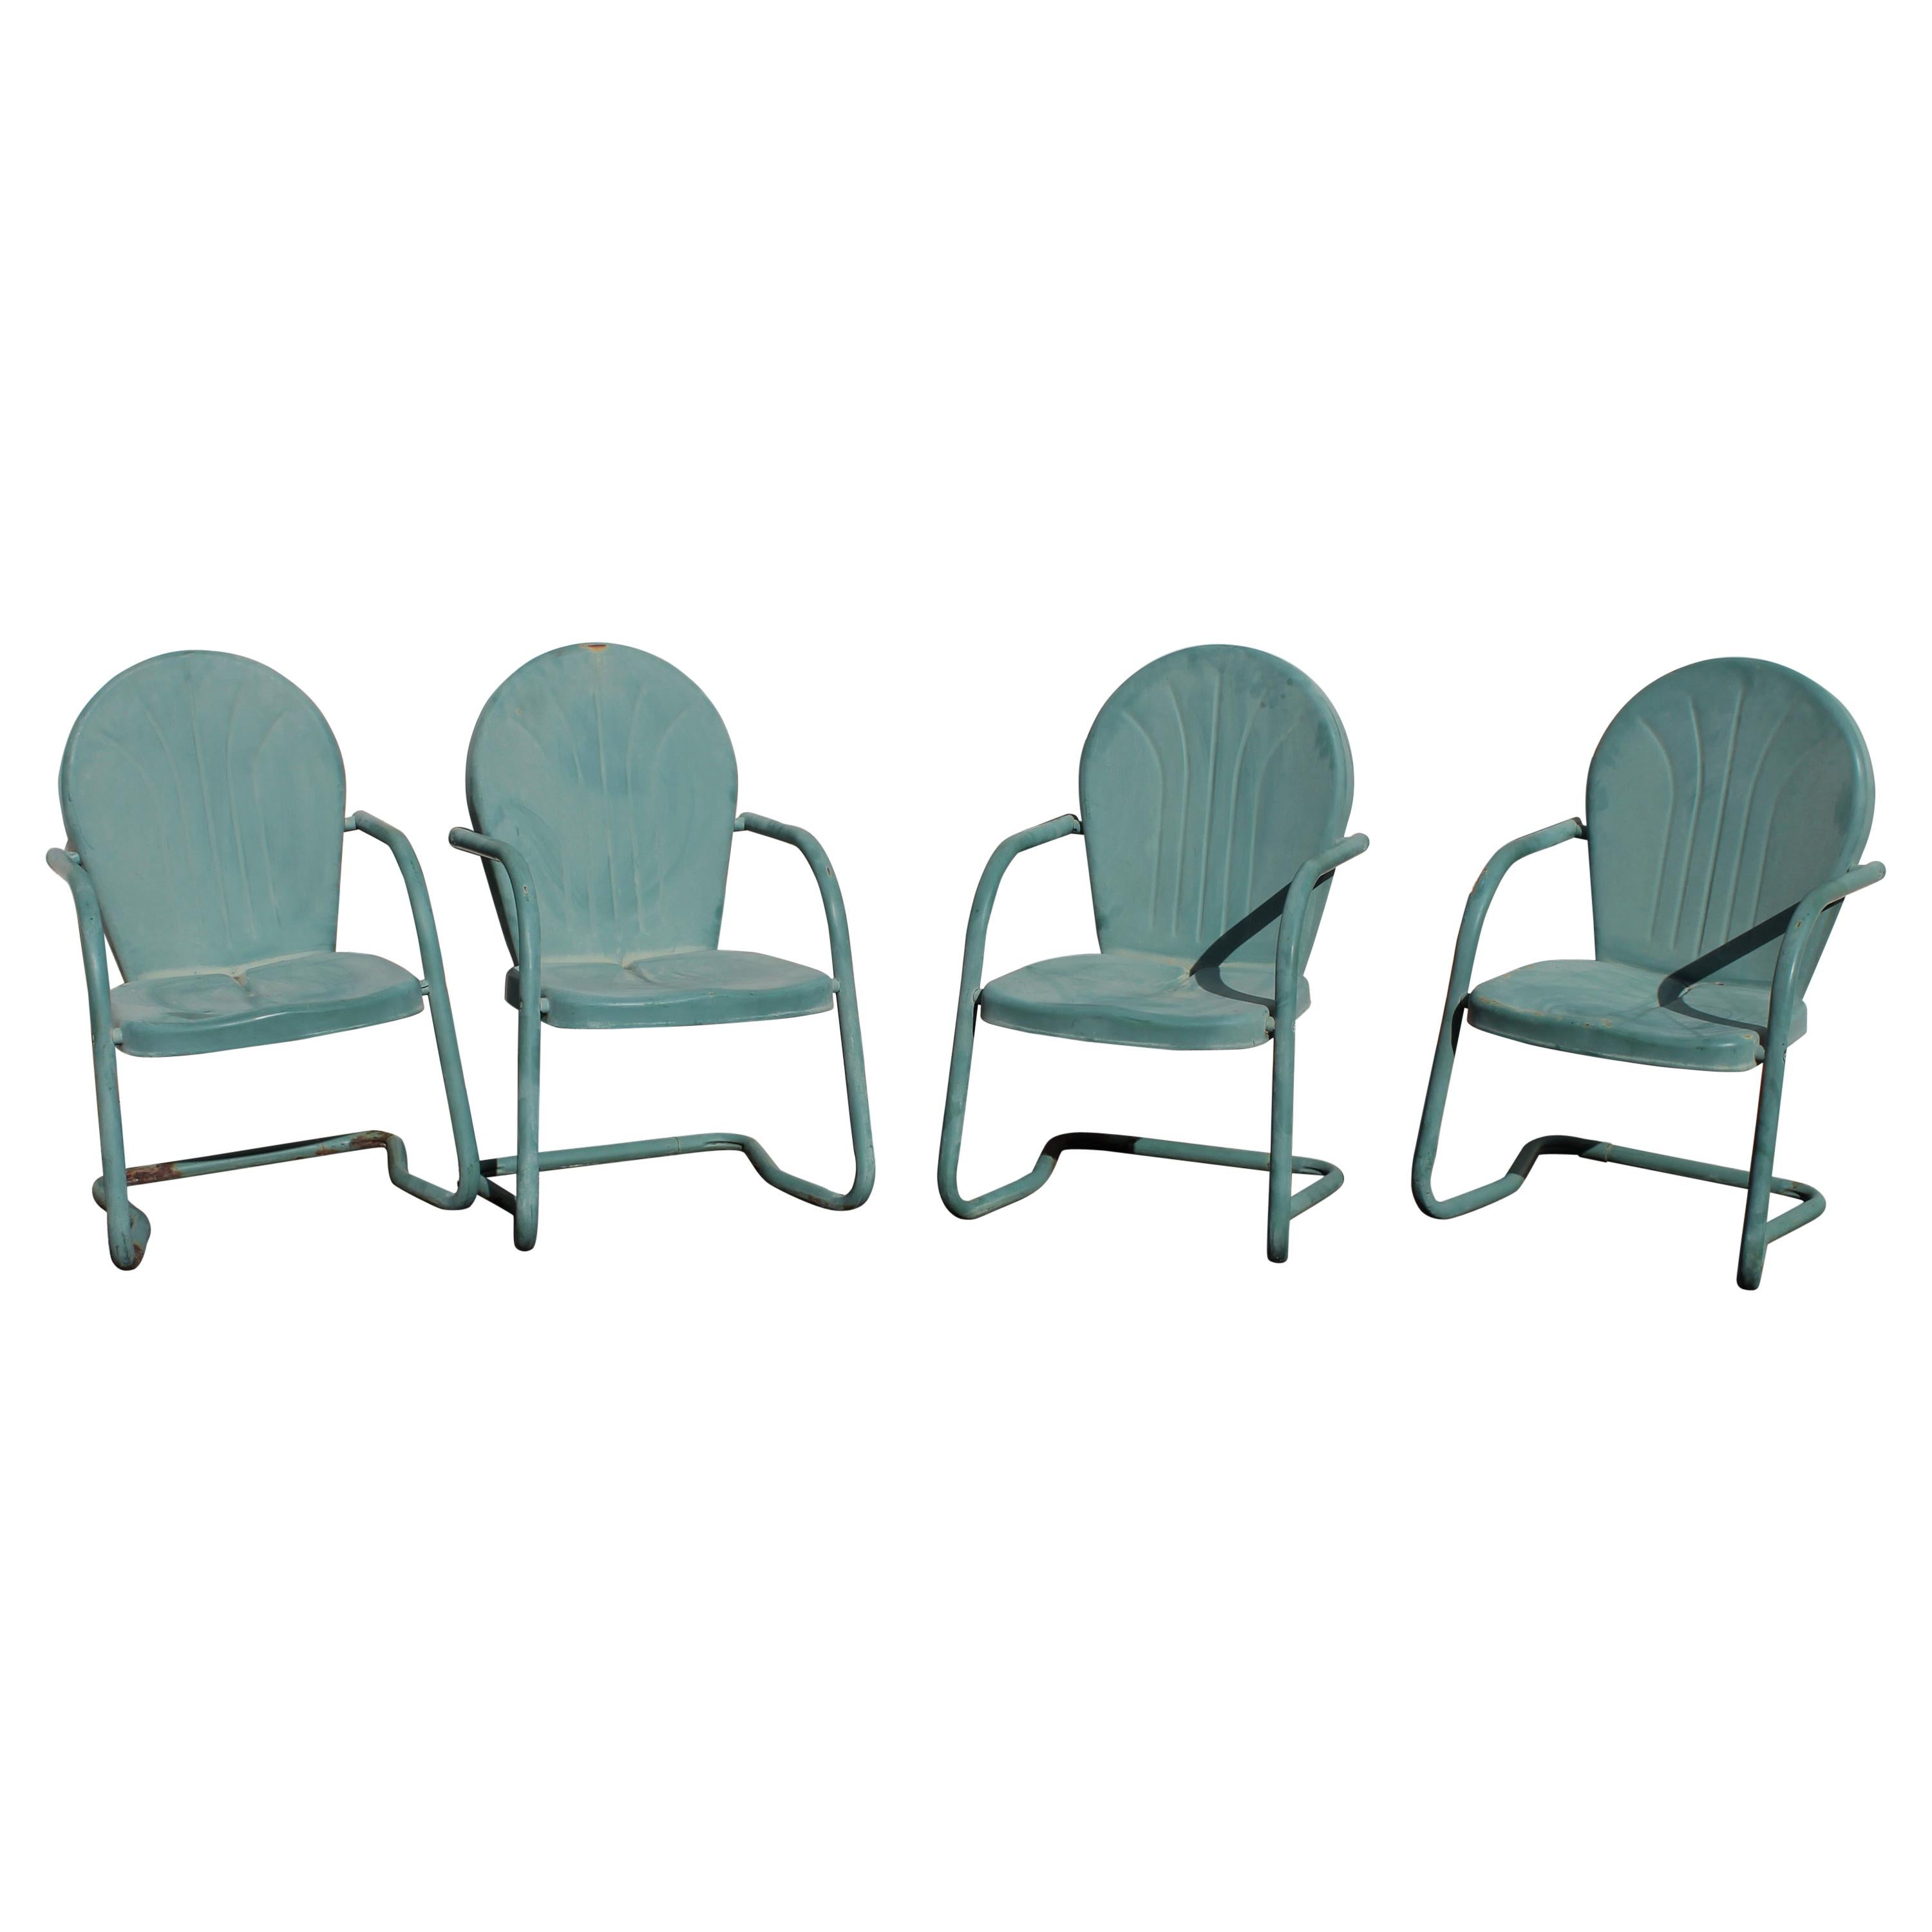 Outdoor Lawn/ Beach Metal Chairs in Sea Foam Green, 4